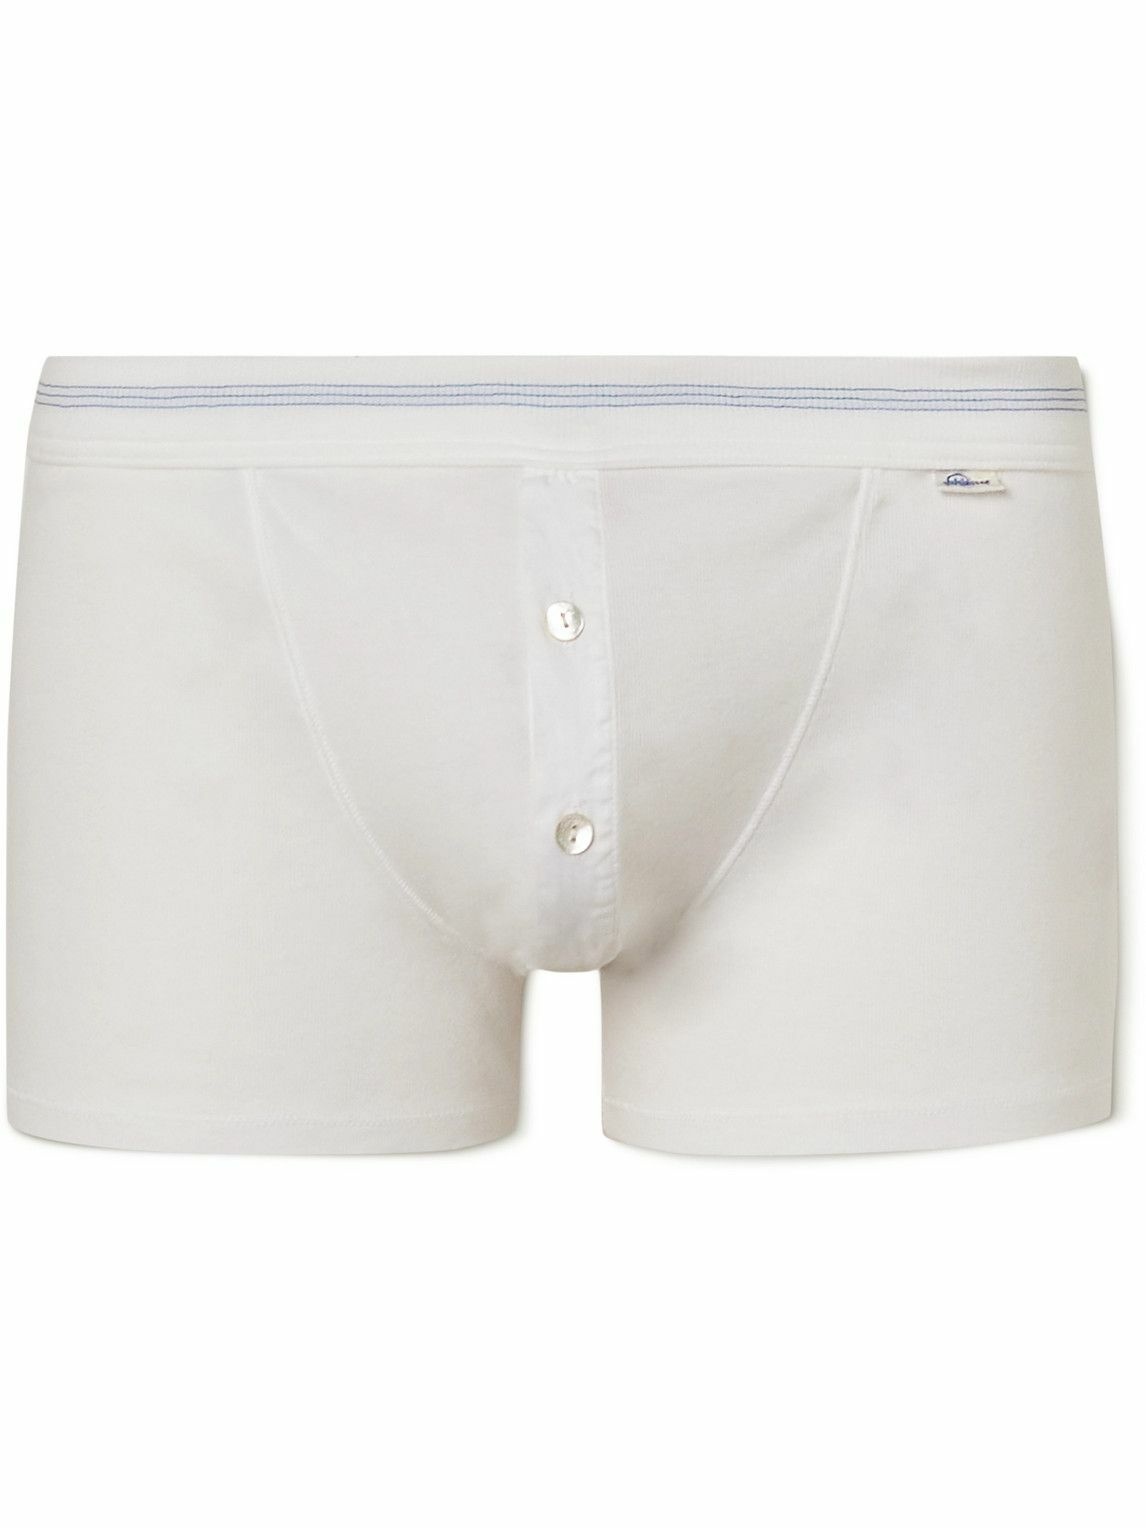 White Schiesser men's underpants